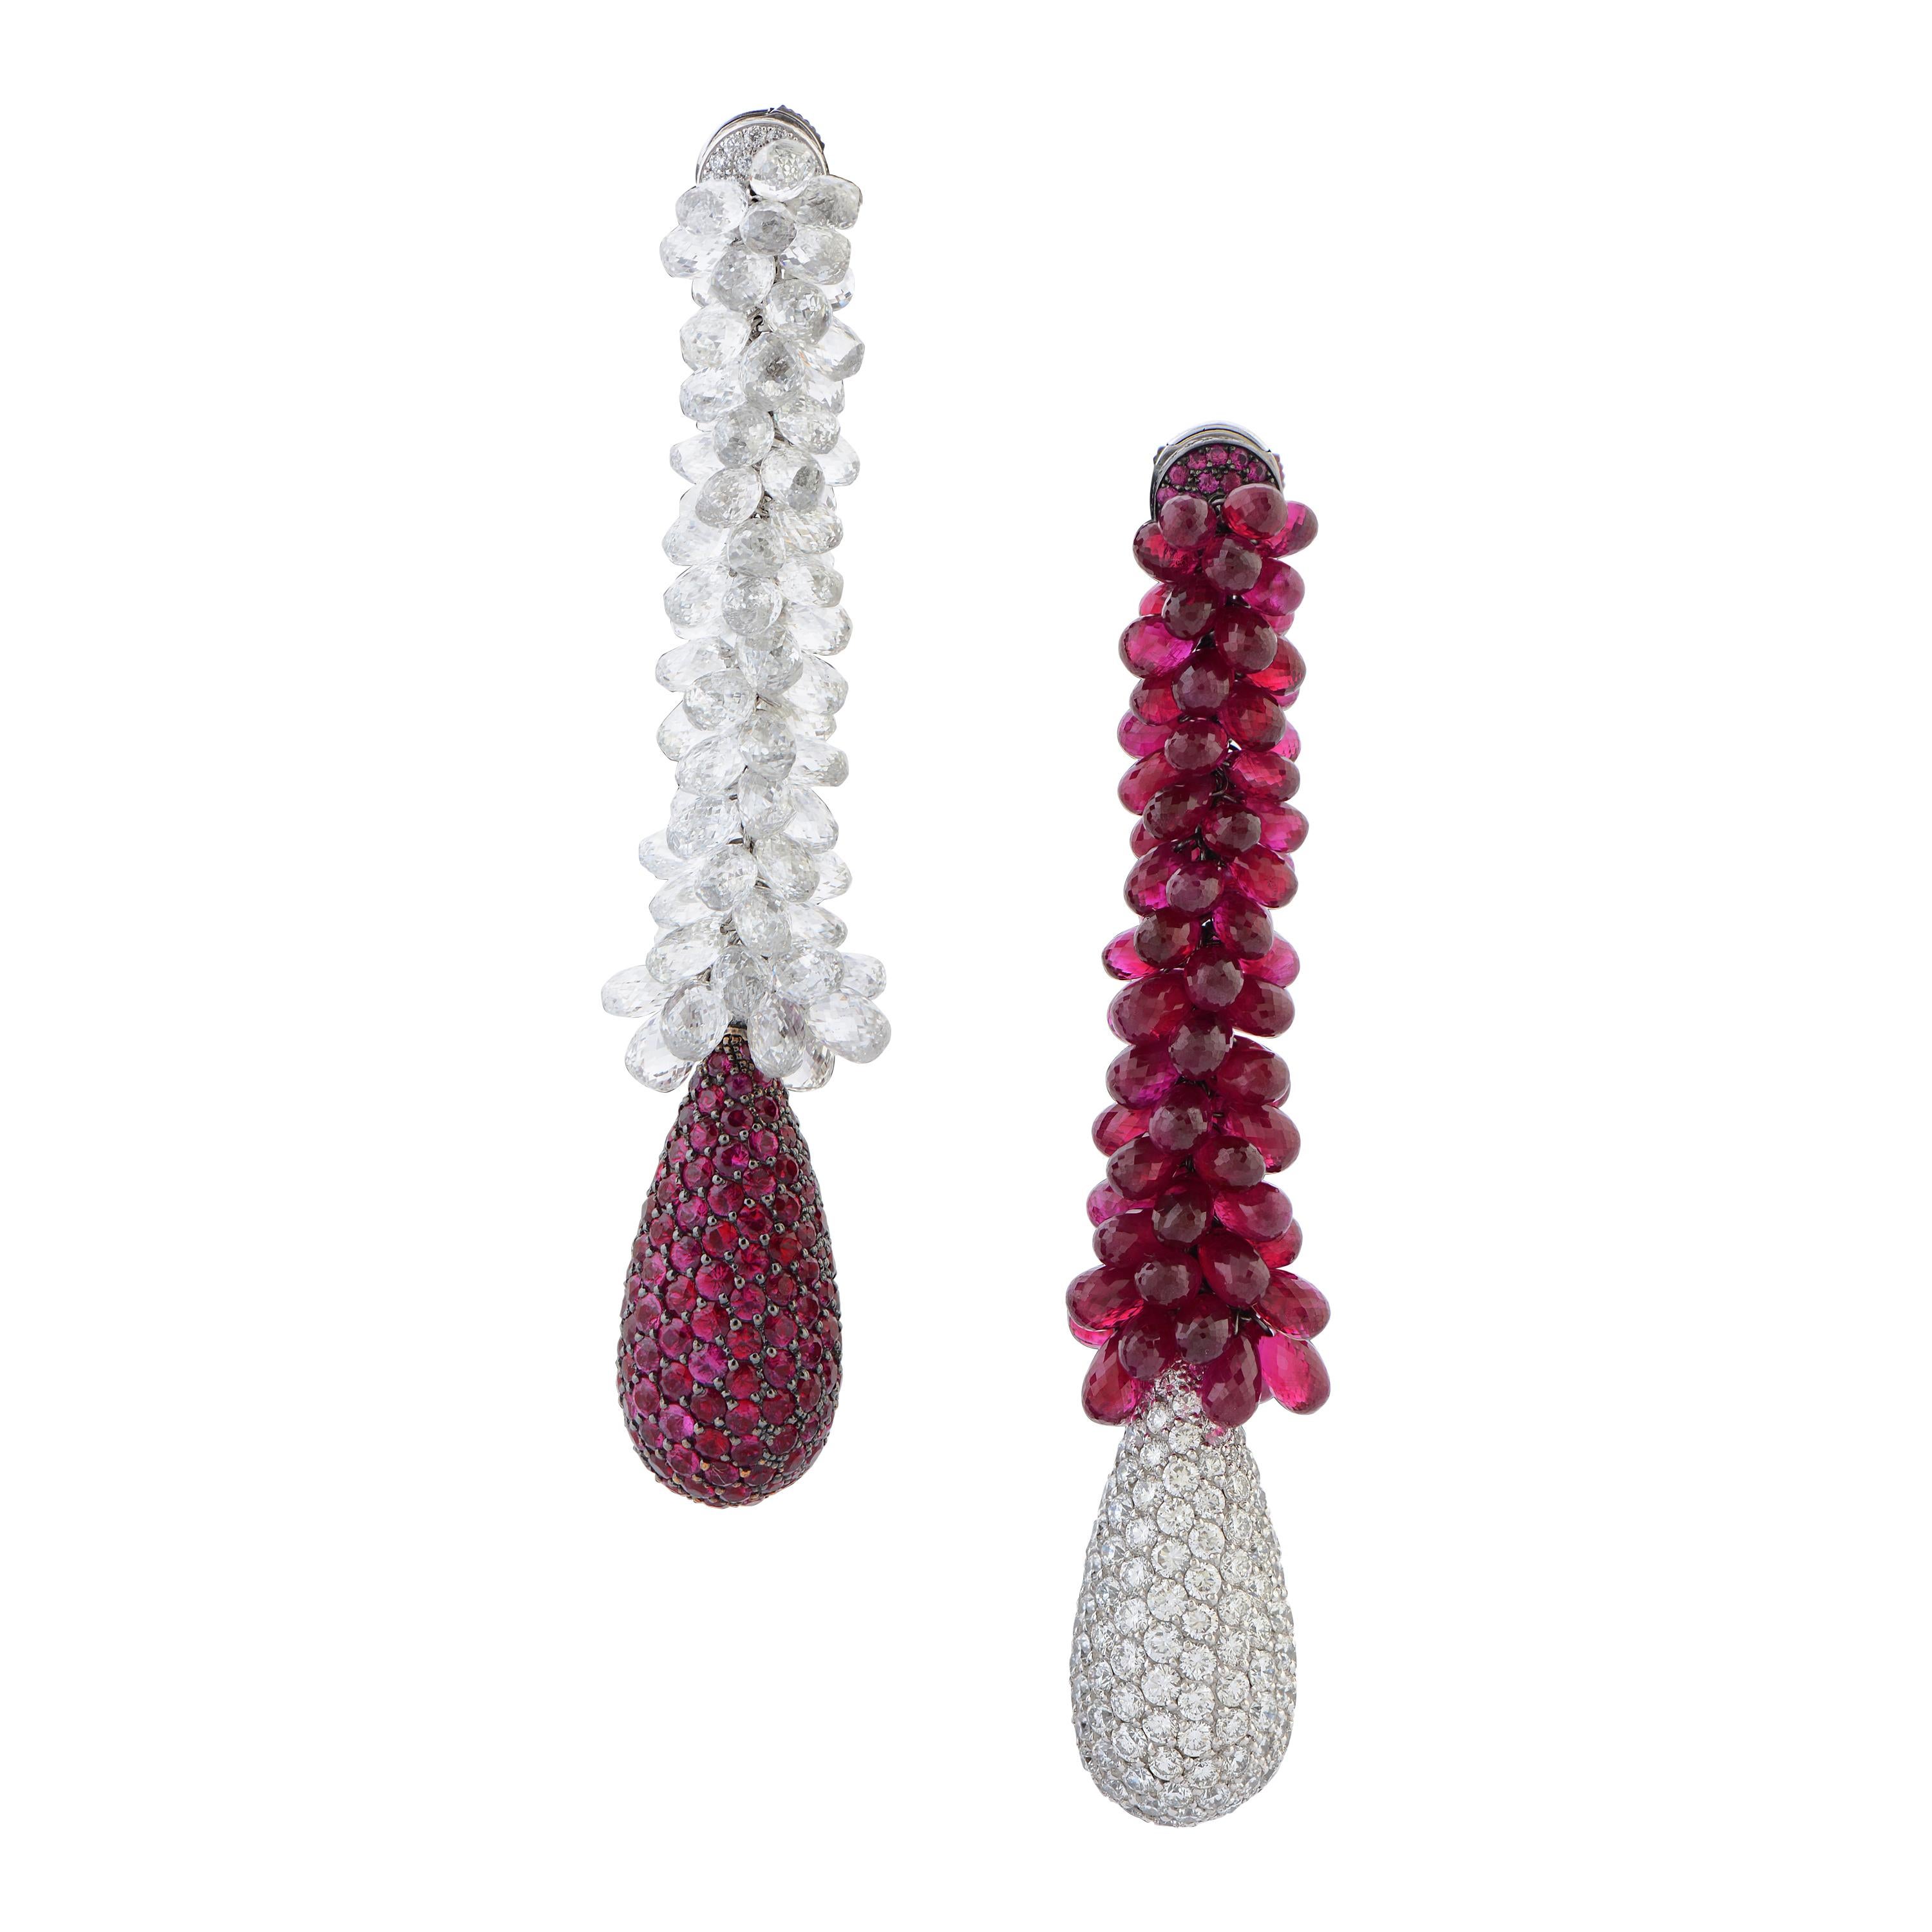 Asymmetrical Ruby and Diamond High Jewelry Pendant Earrings by de Grisogono